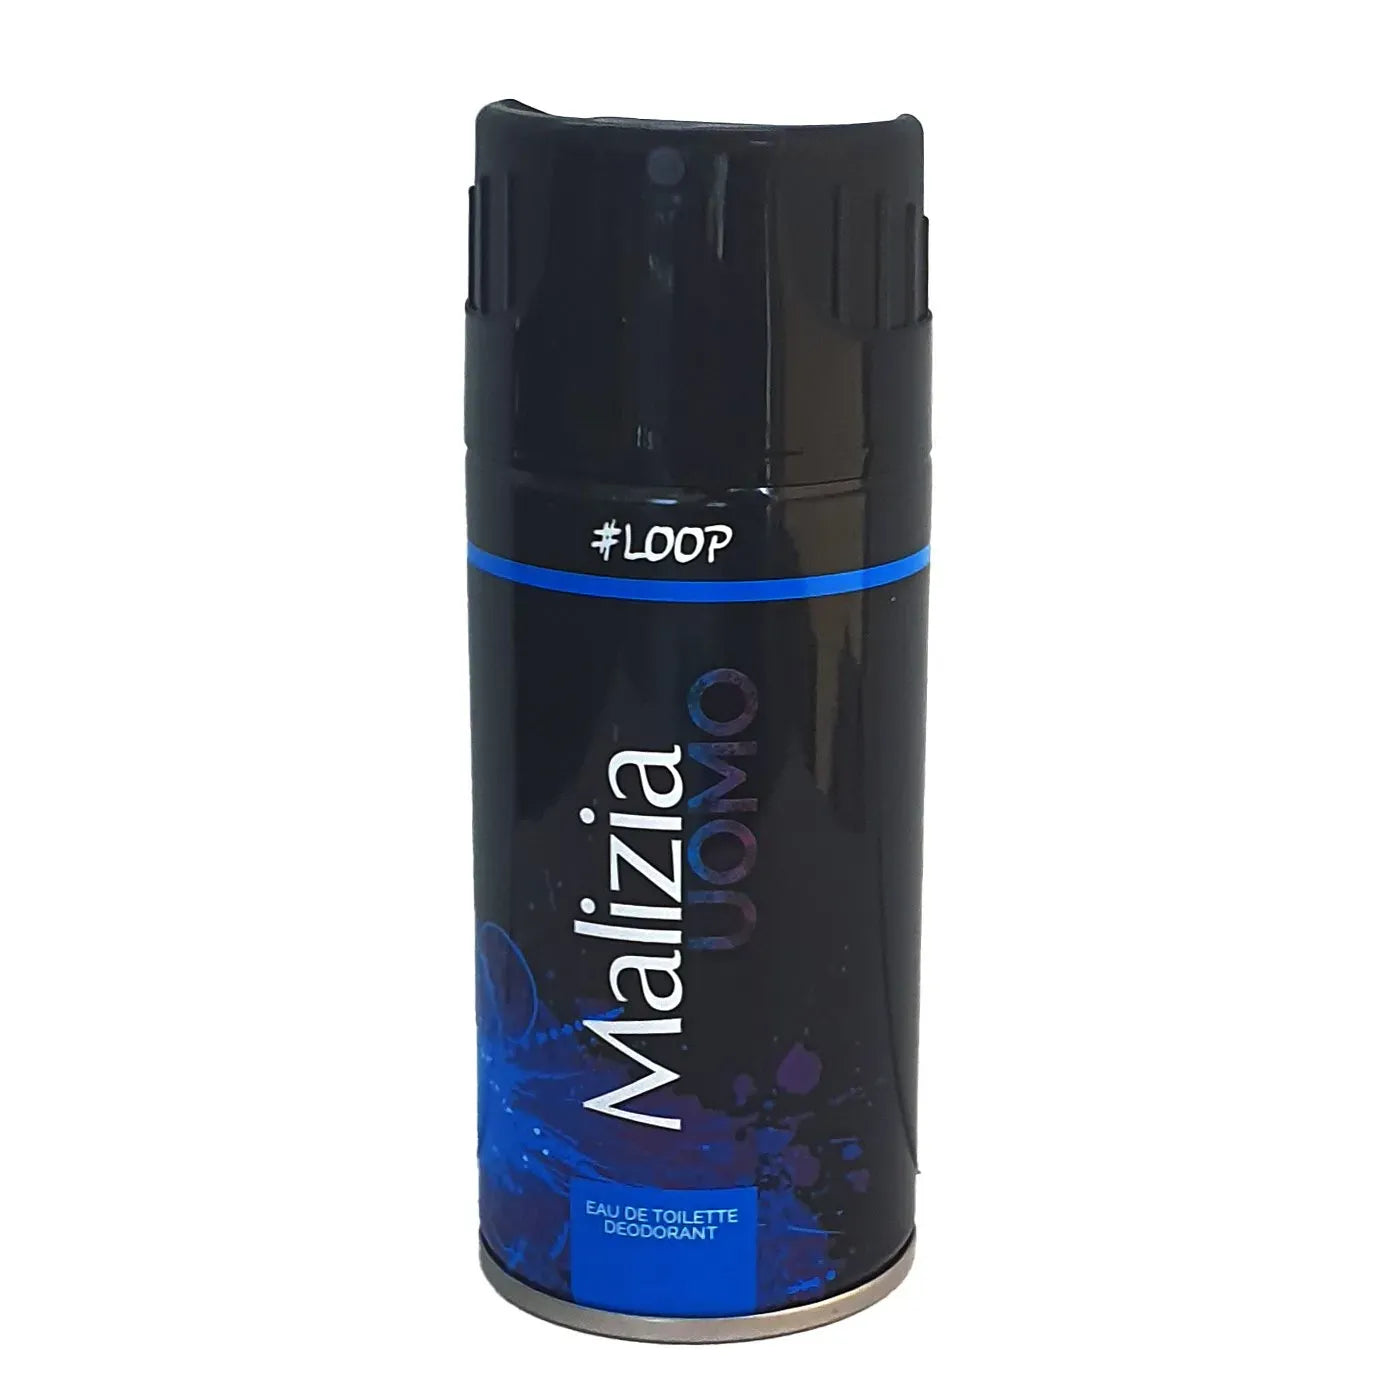 Malizia Loop Eau De Toilette Deodorant For Men, 150 ml